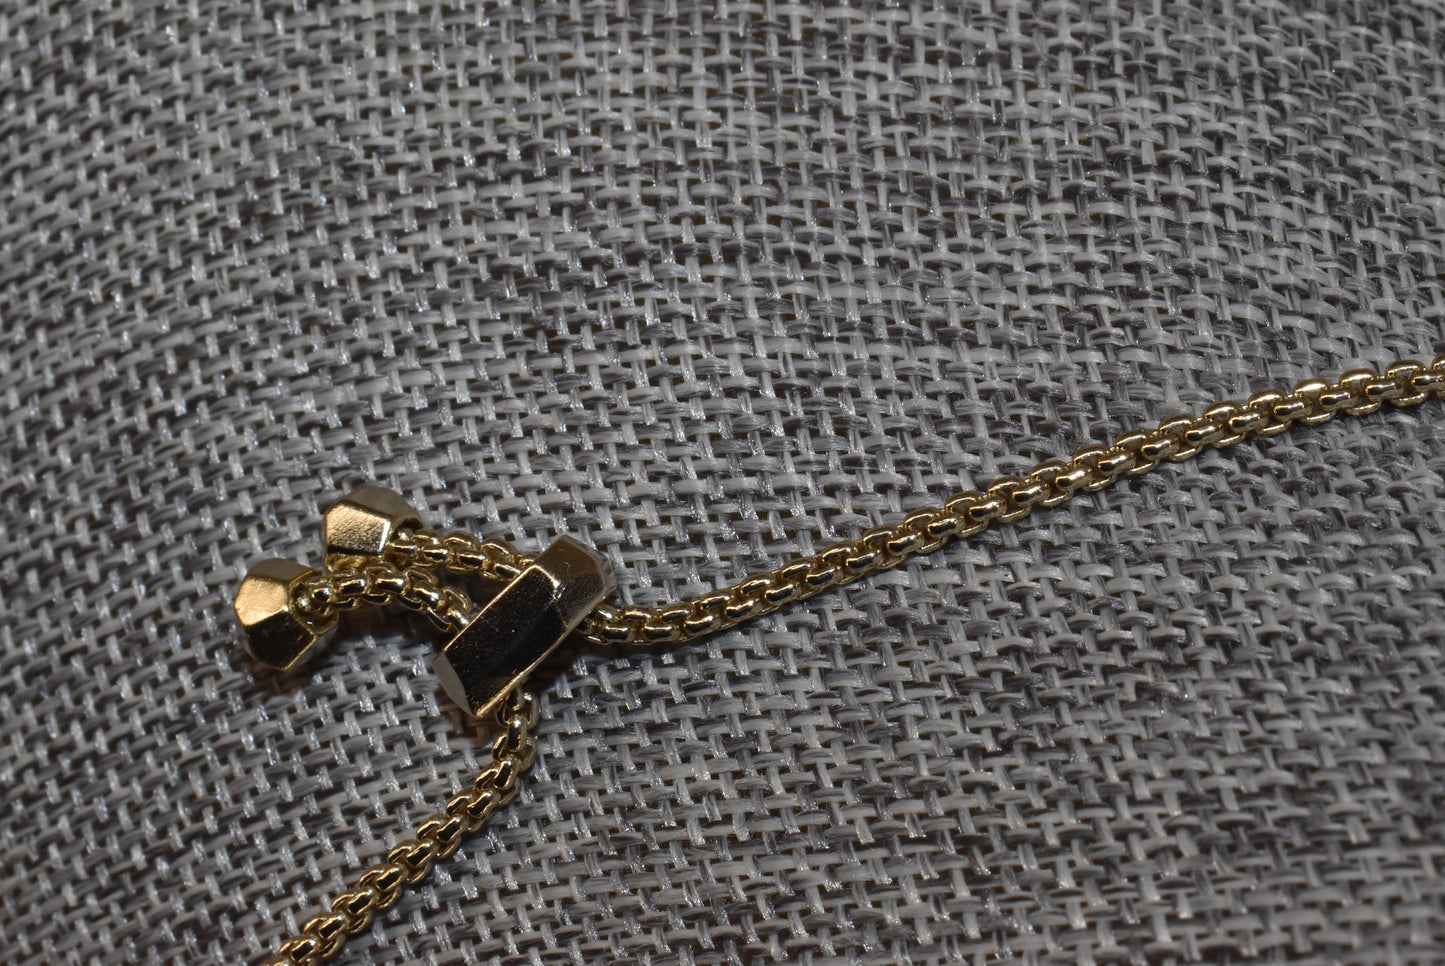 Necklace Pendant By Kendra Scott